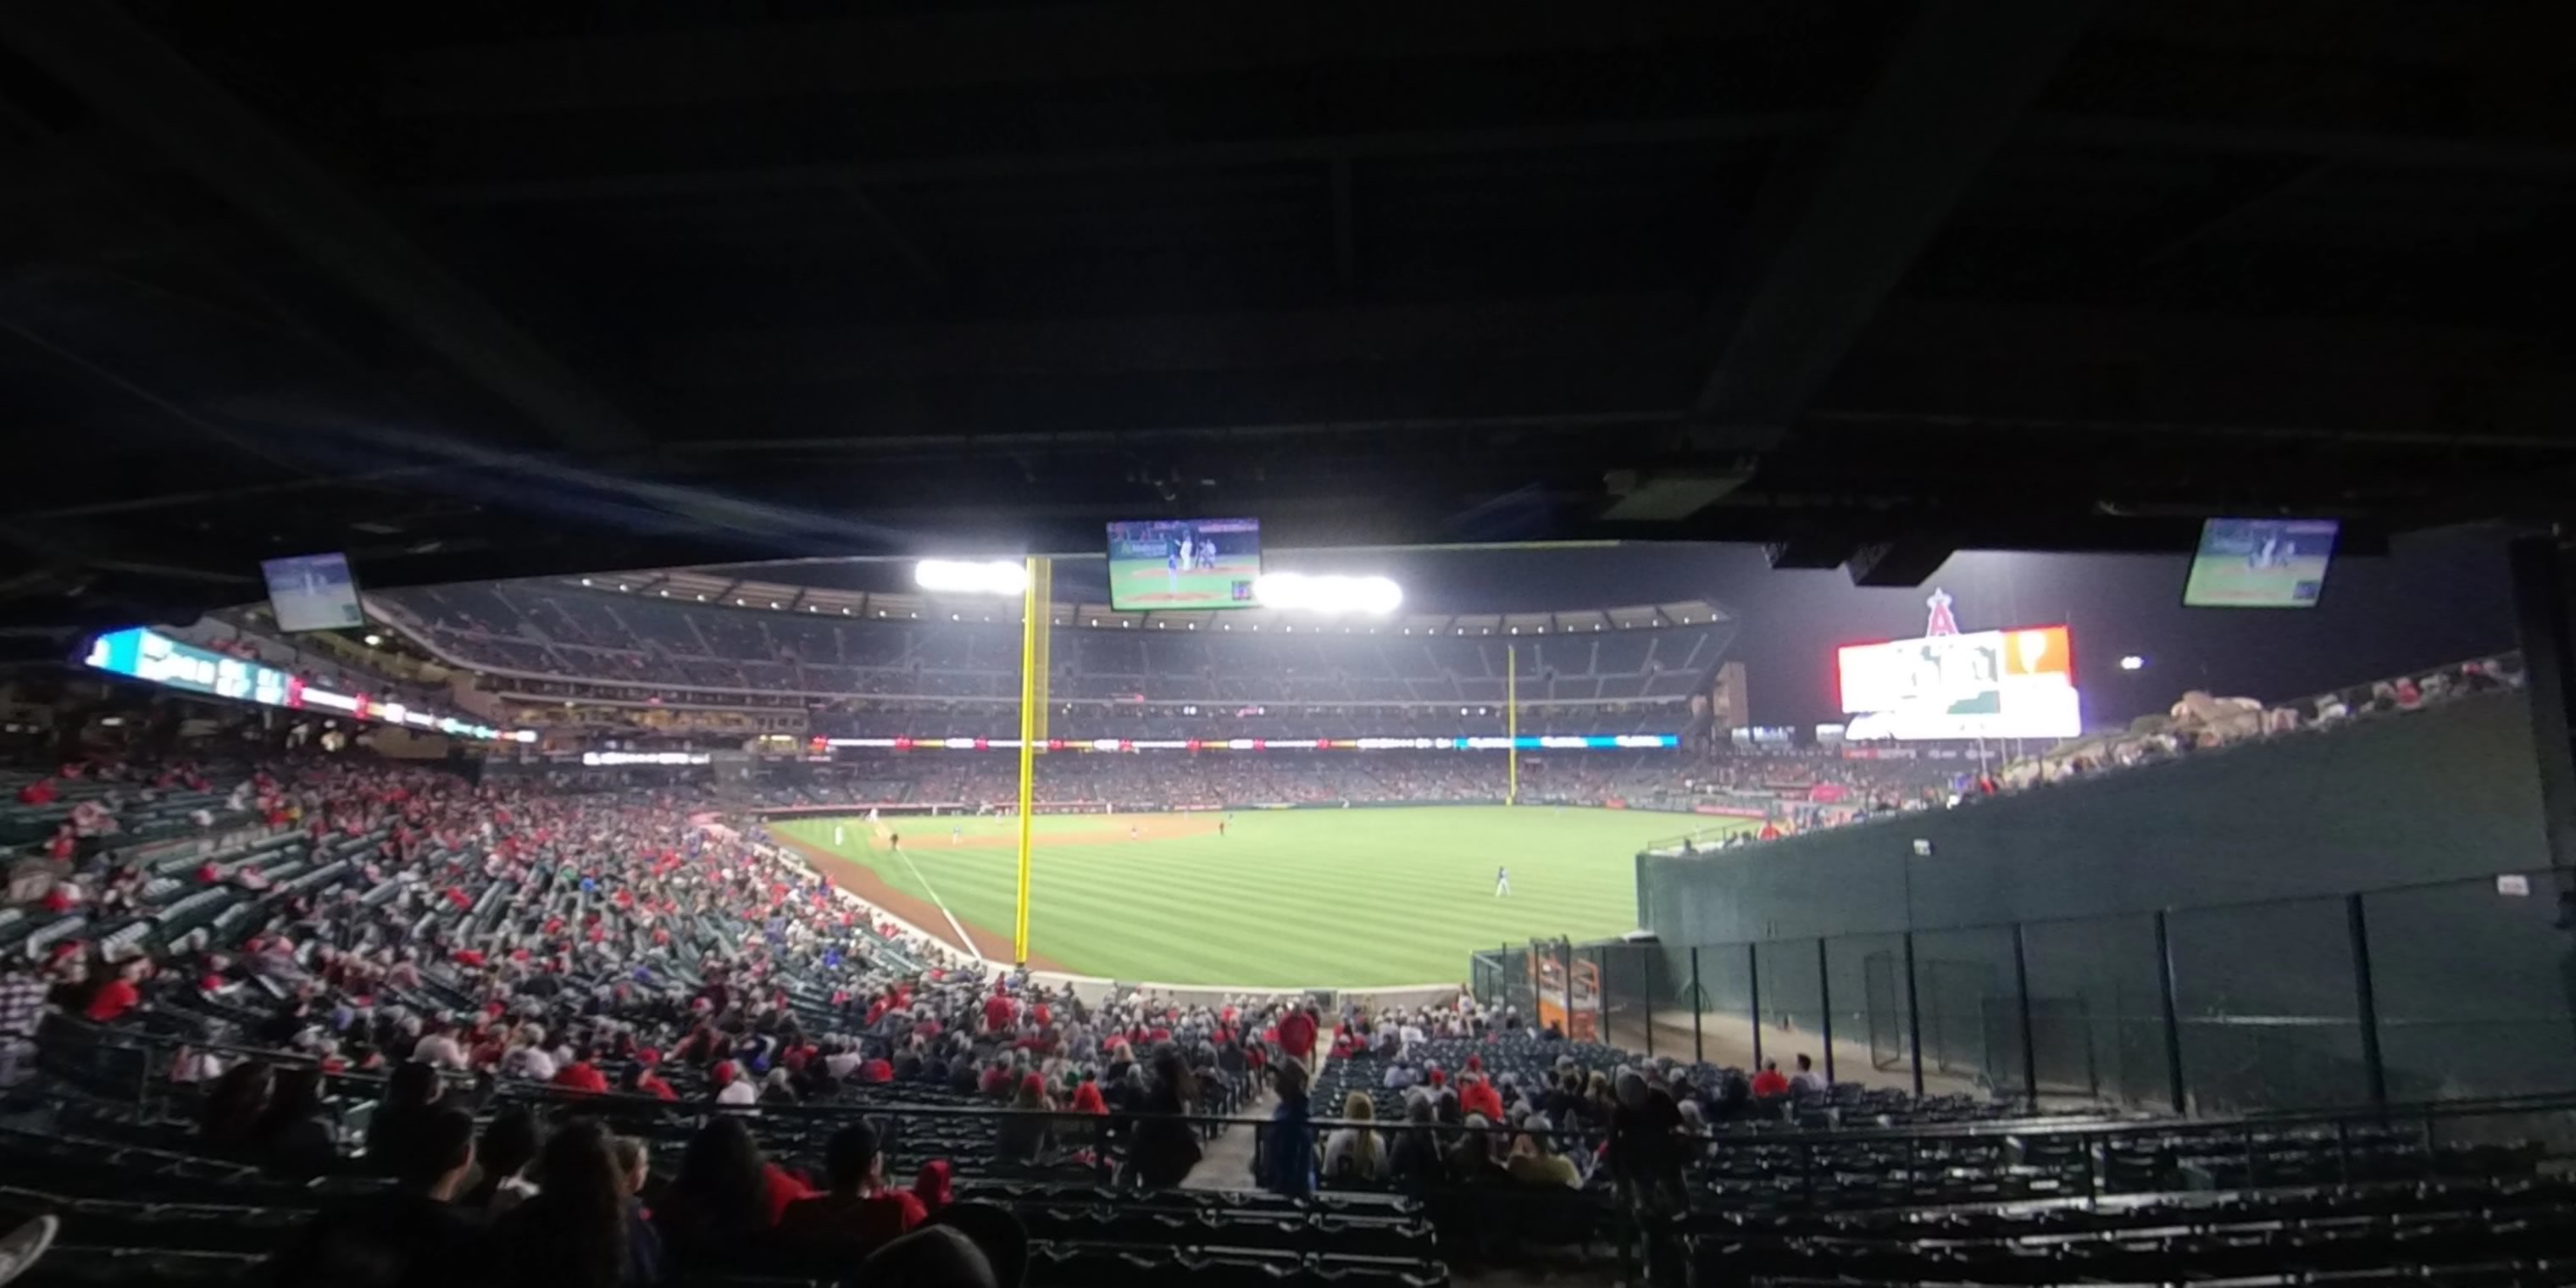 section 232 panoramic seat view  - angel stadium